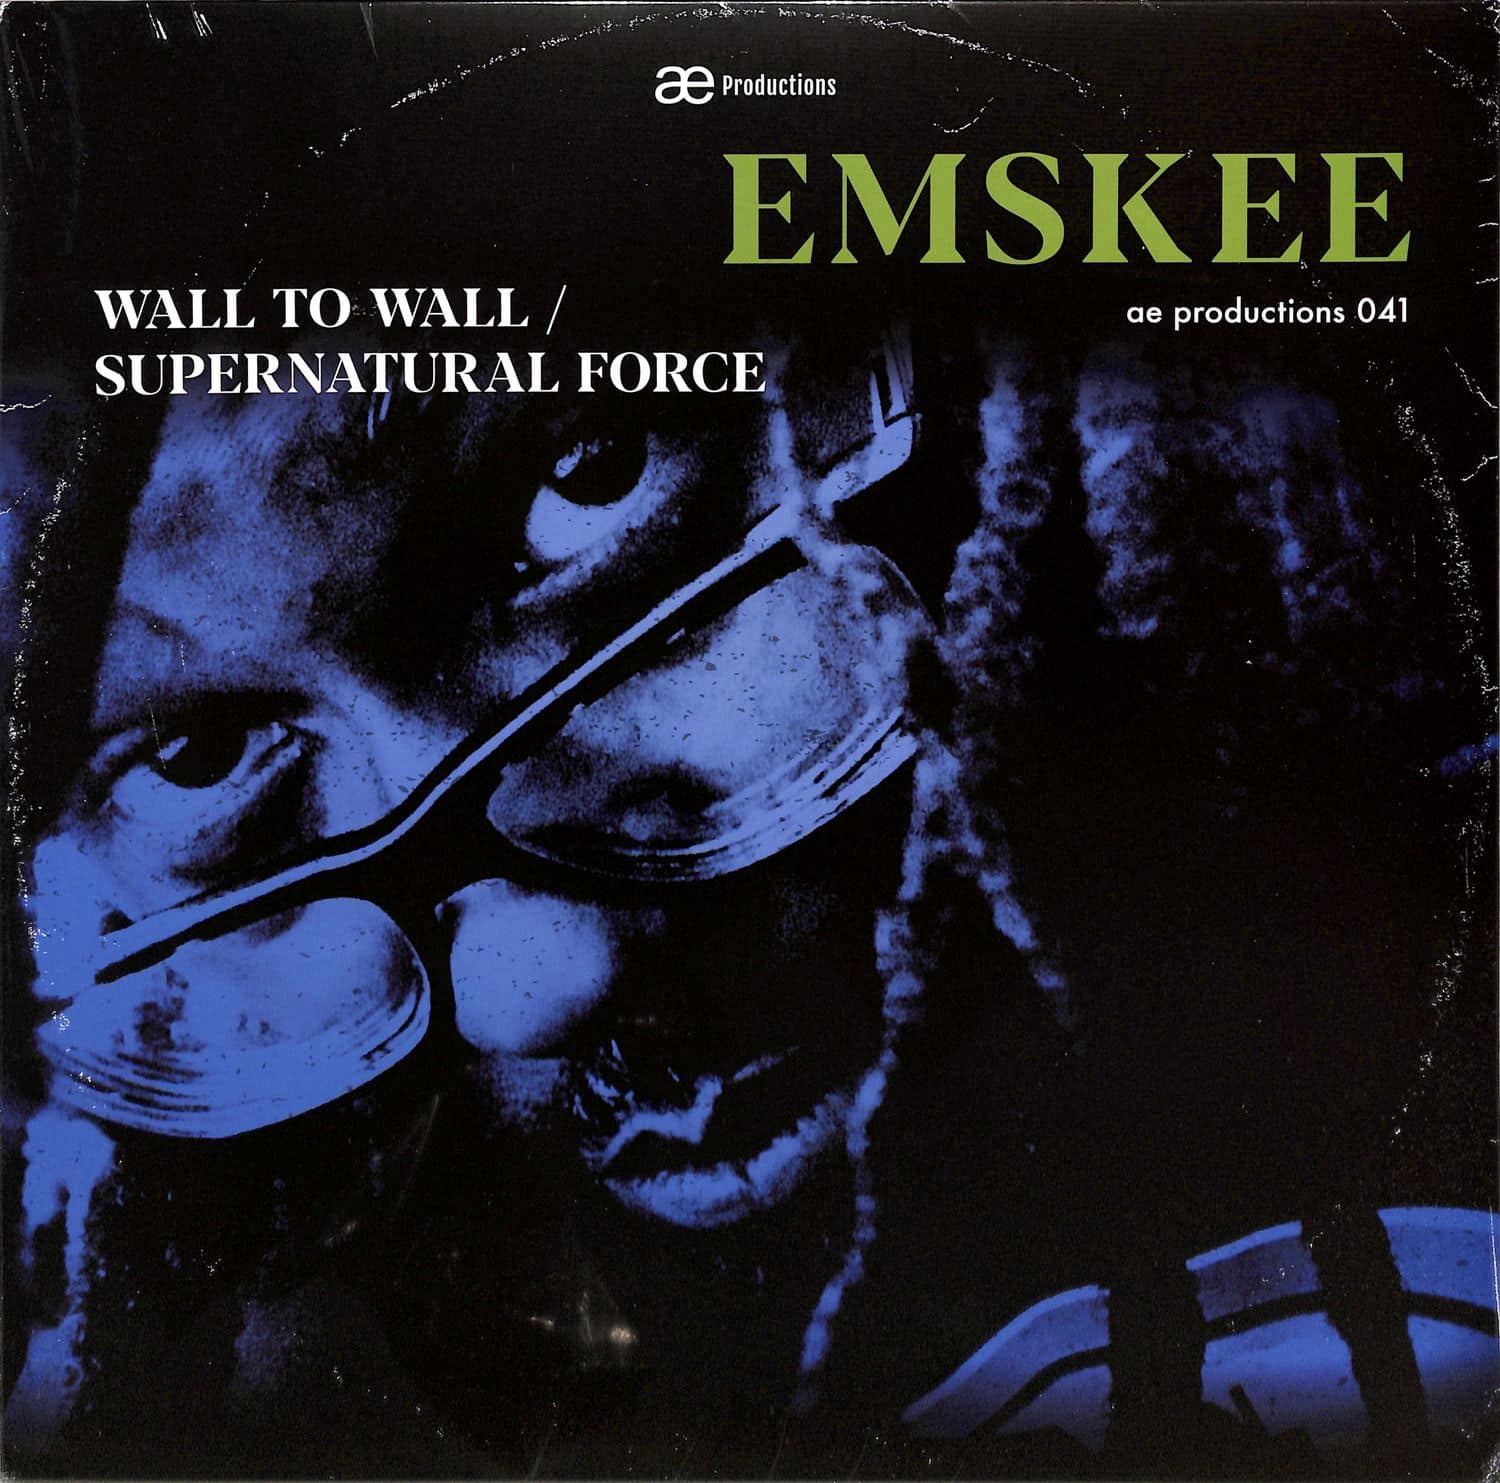 Emskee - WALL TO WALL / SUPERNATURAL FORCE